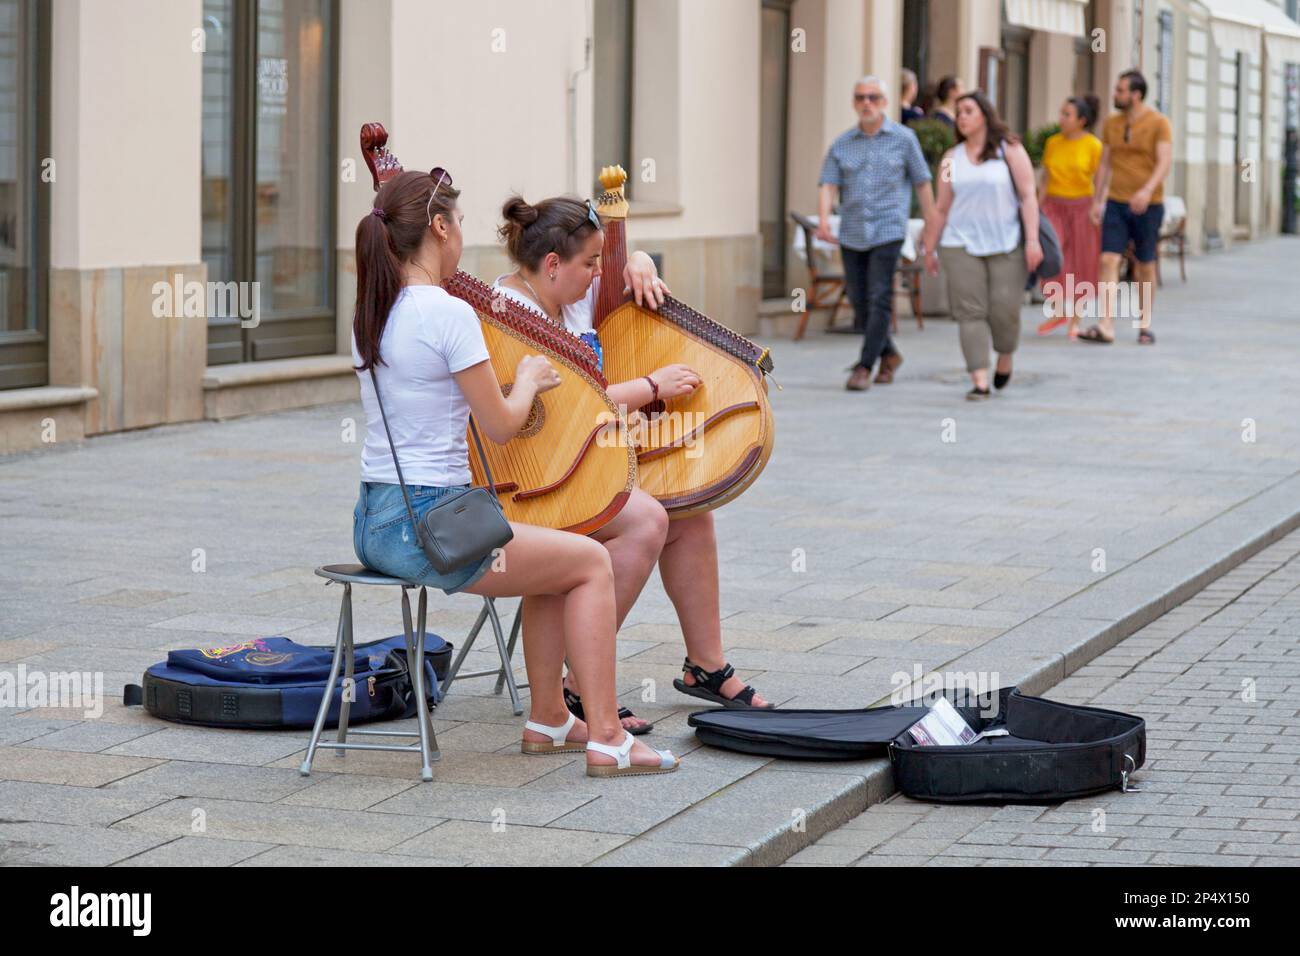 Krakow, Poland - June 06 2019: Two young women playing banduras in a touristic street. A bandura (Ukrainian: банду́ра) is a Ukrainian, plucked string, Stock Photo